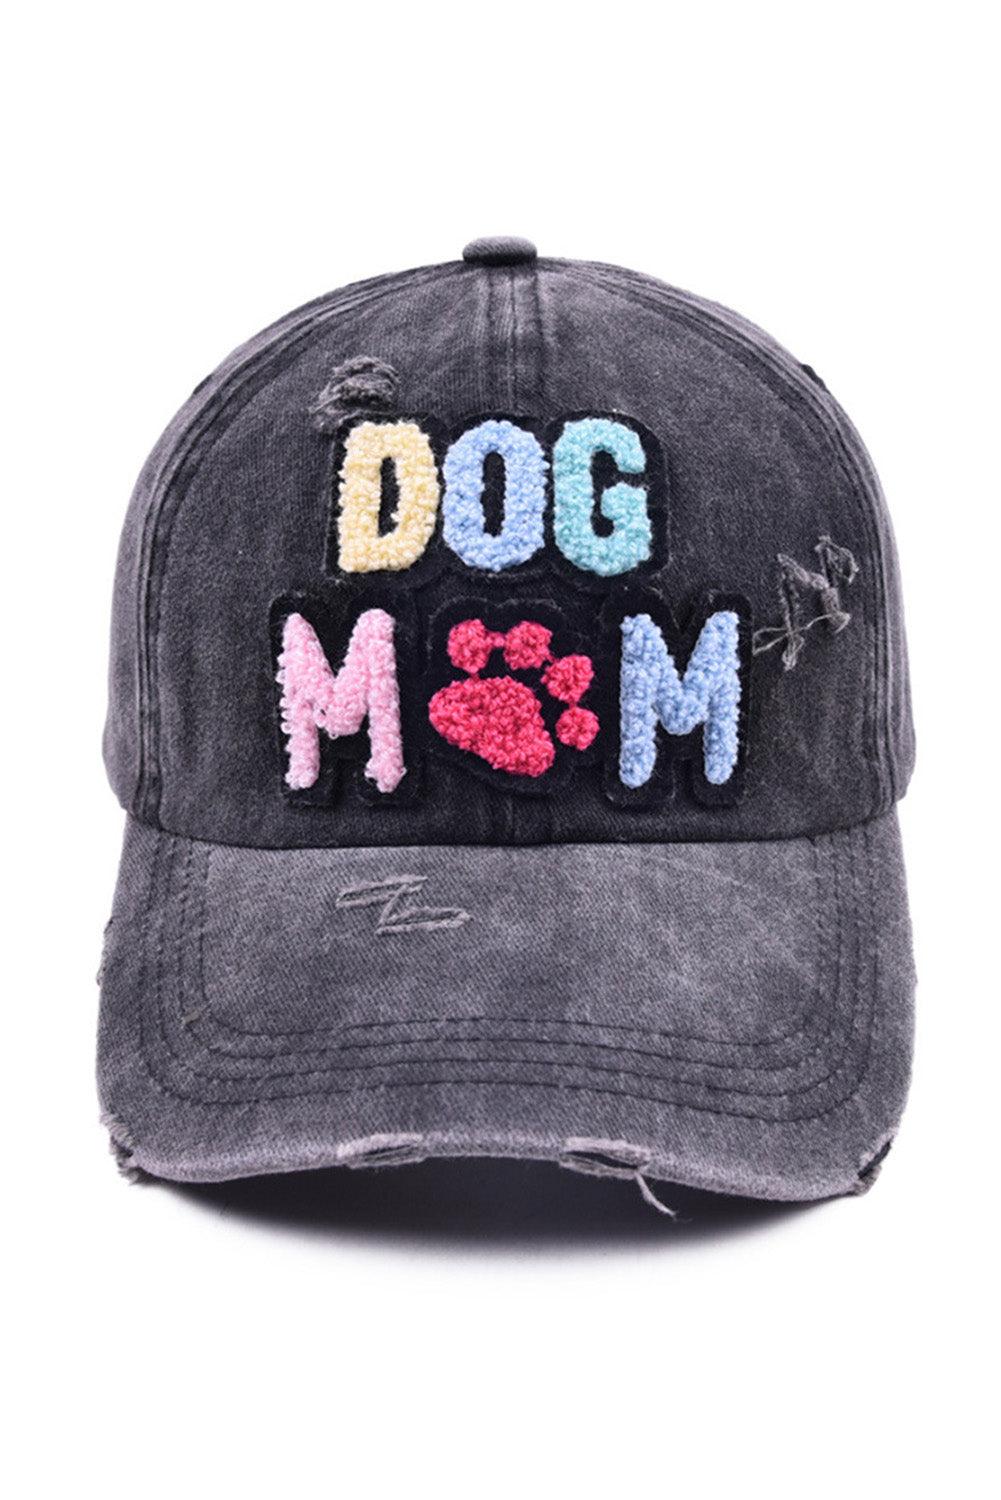 DOG MAMA Baseball Cap - L & M Kee, LLC